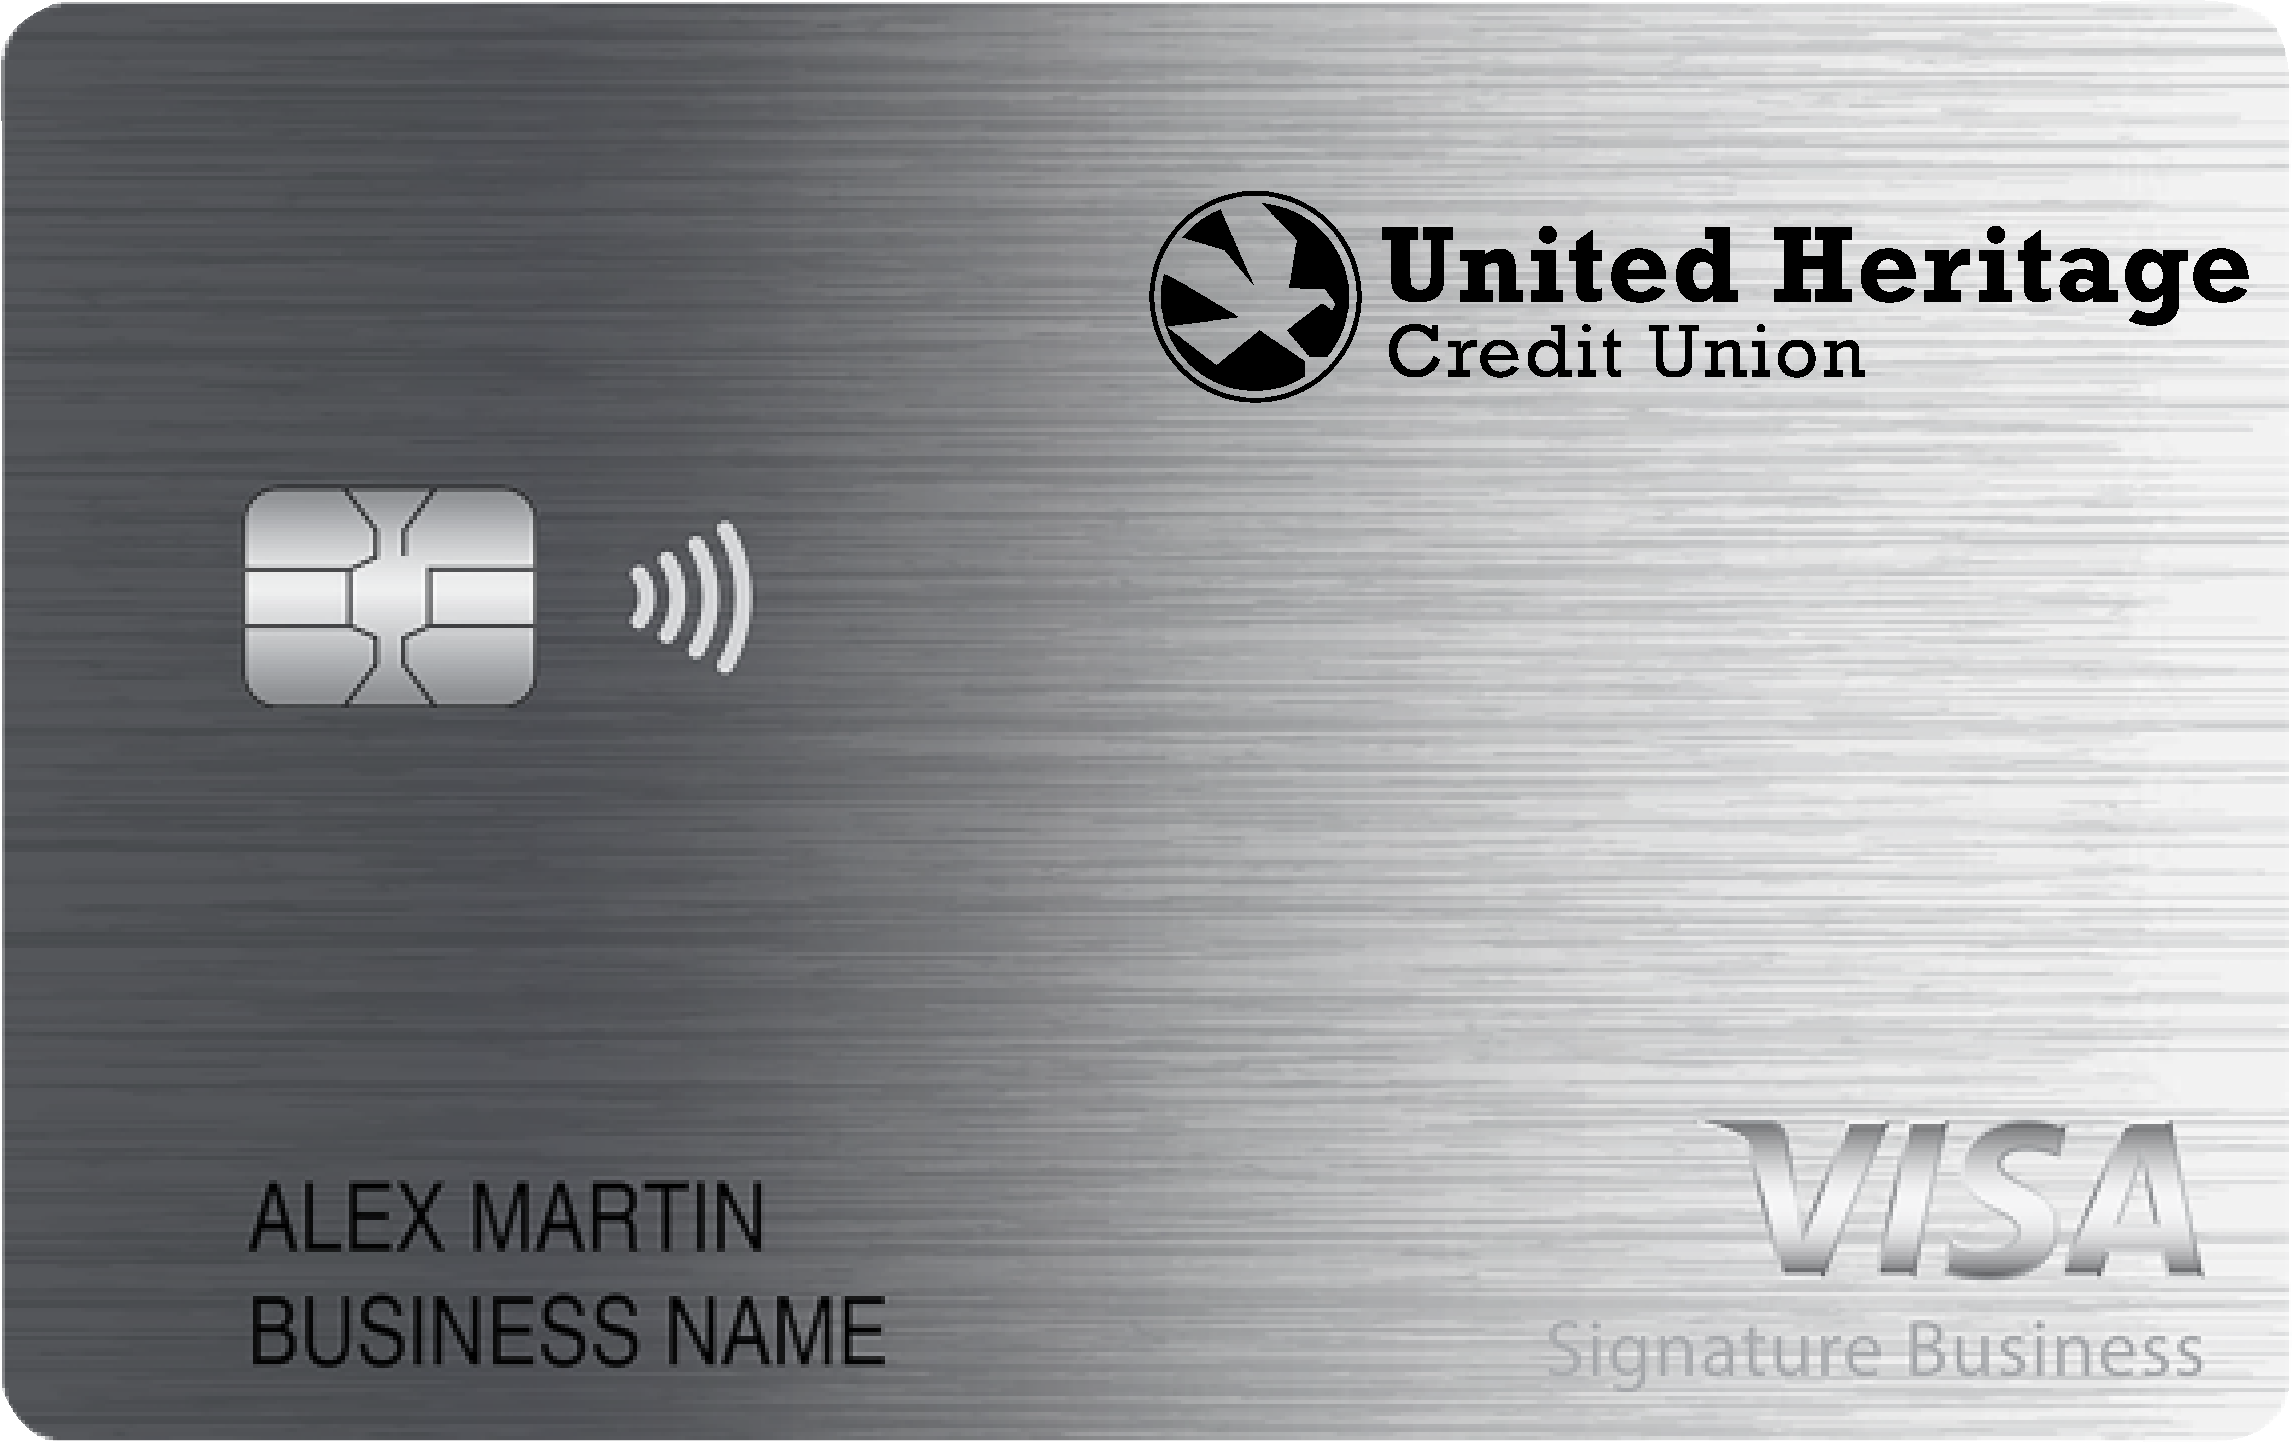 United Heritage Credit Union Smart Business Rewards Card